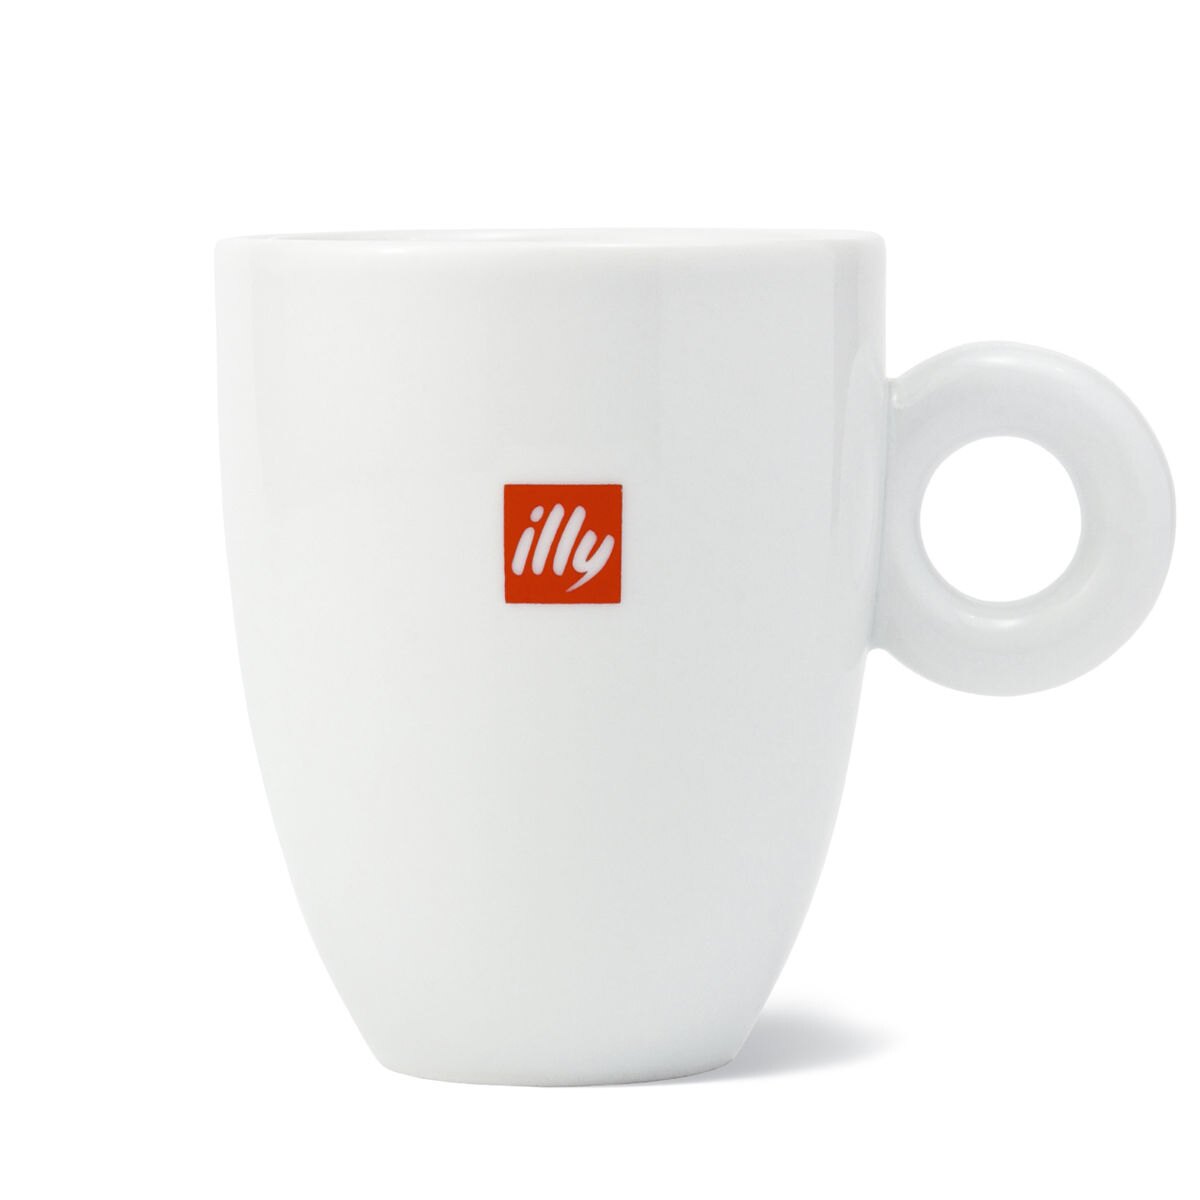 Grosse tasse avec logo illy – Une grosse tasse de 8 oz